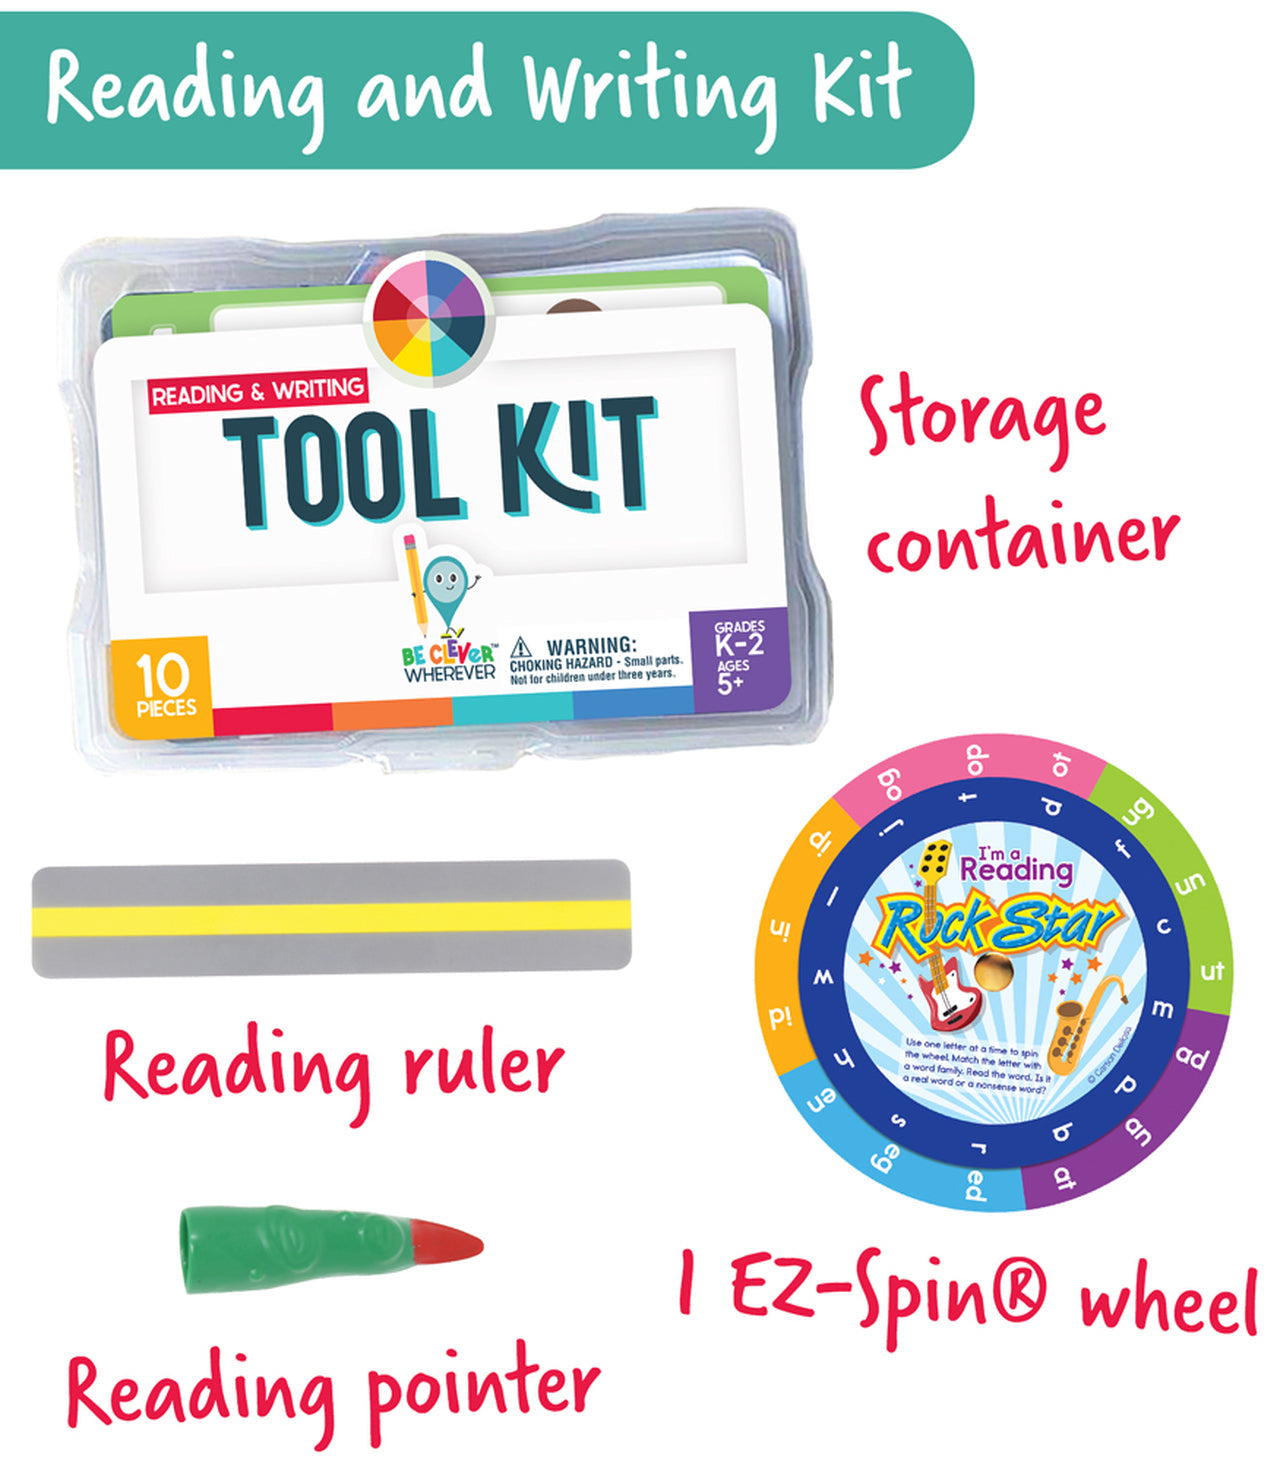 Reading & Writing Tool Kit Grades K-2